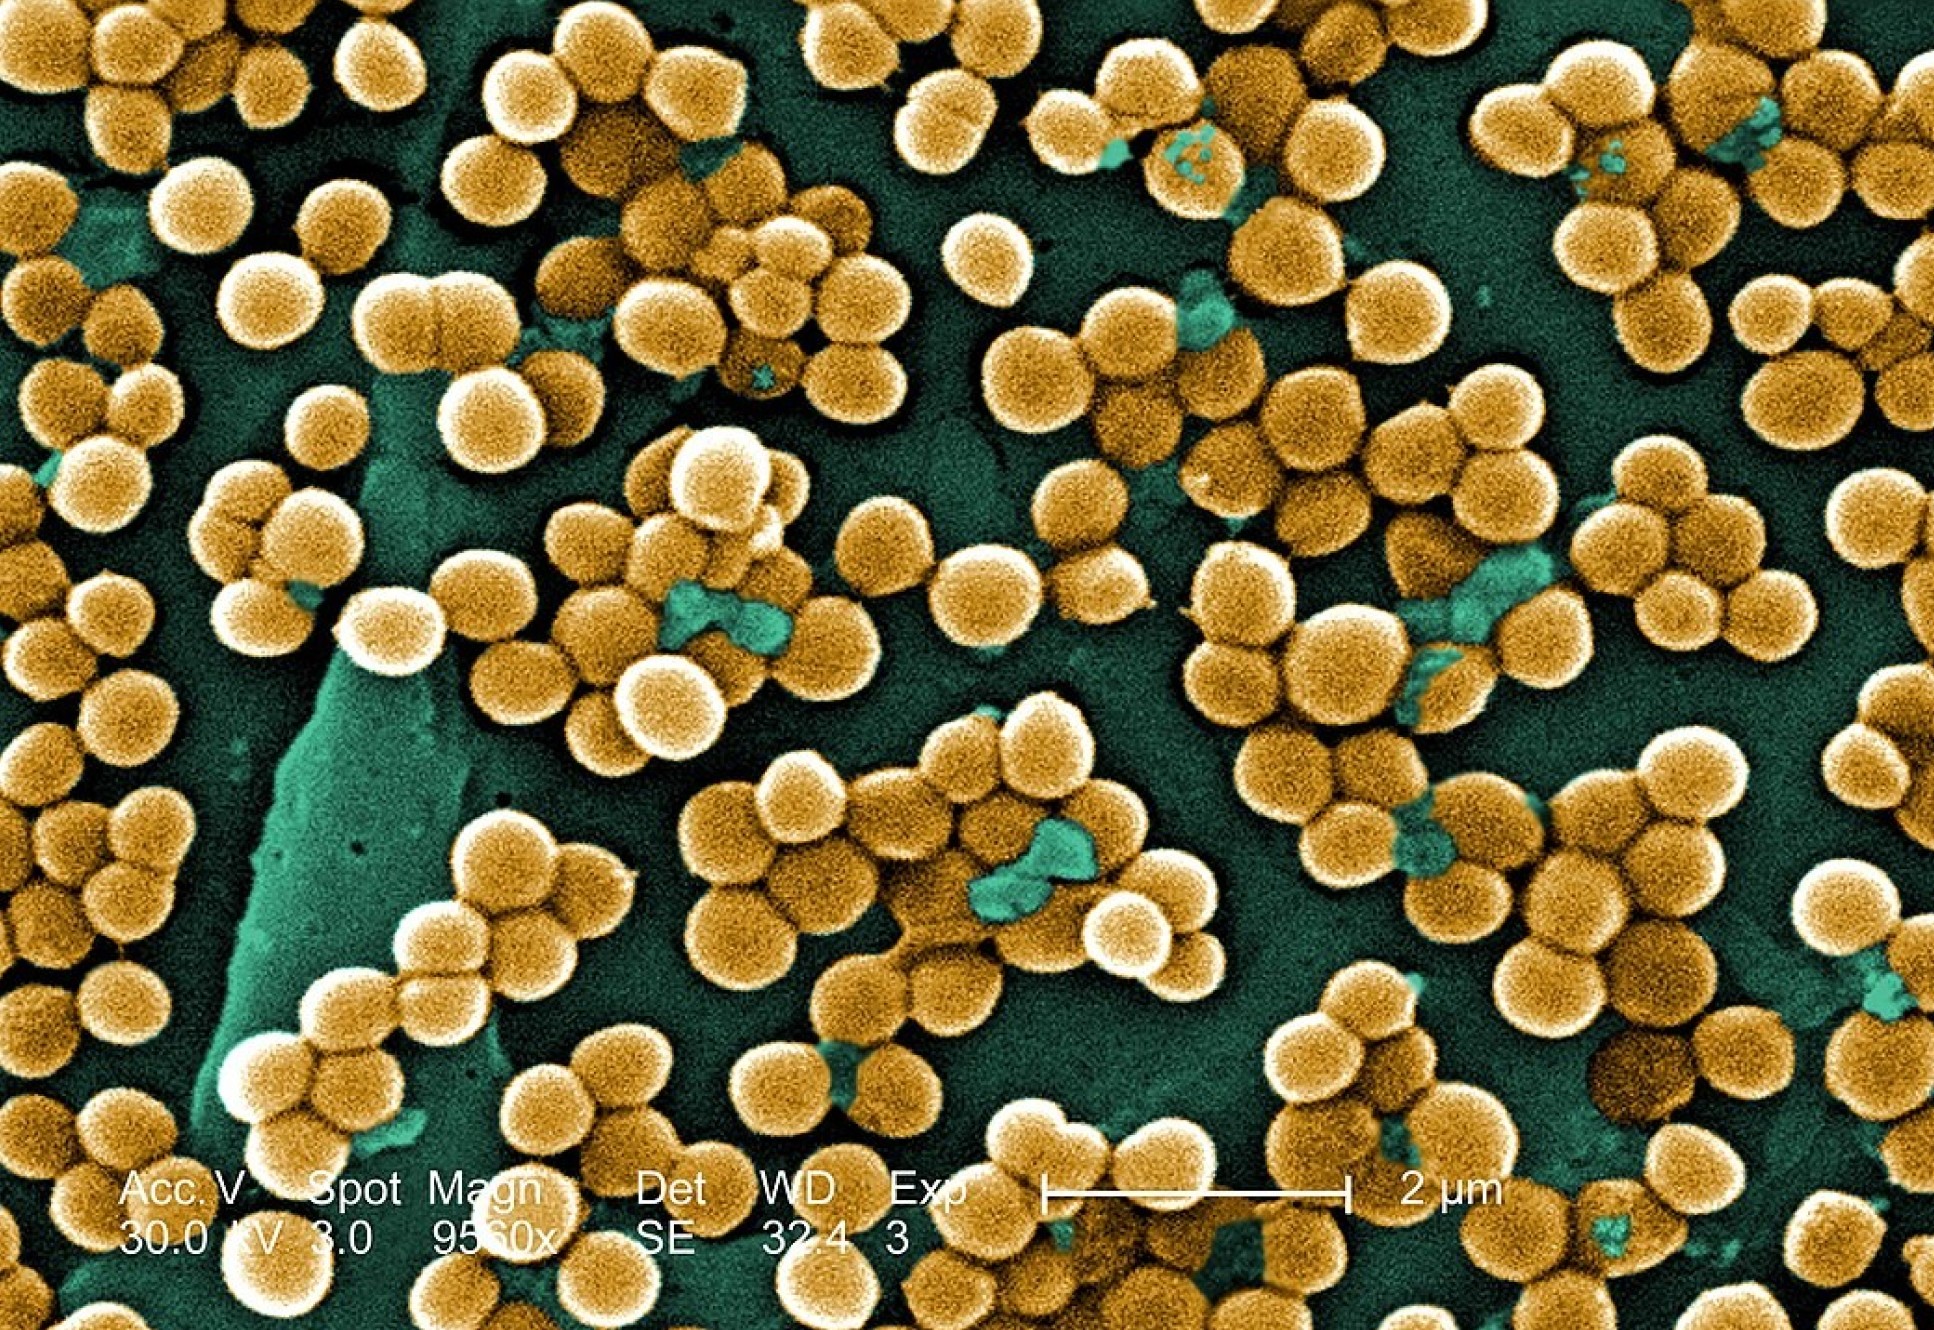 MRSA bacteria